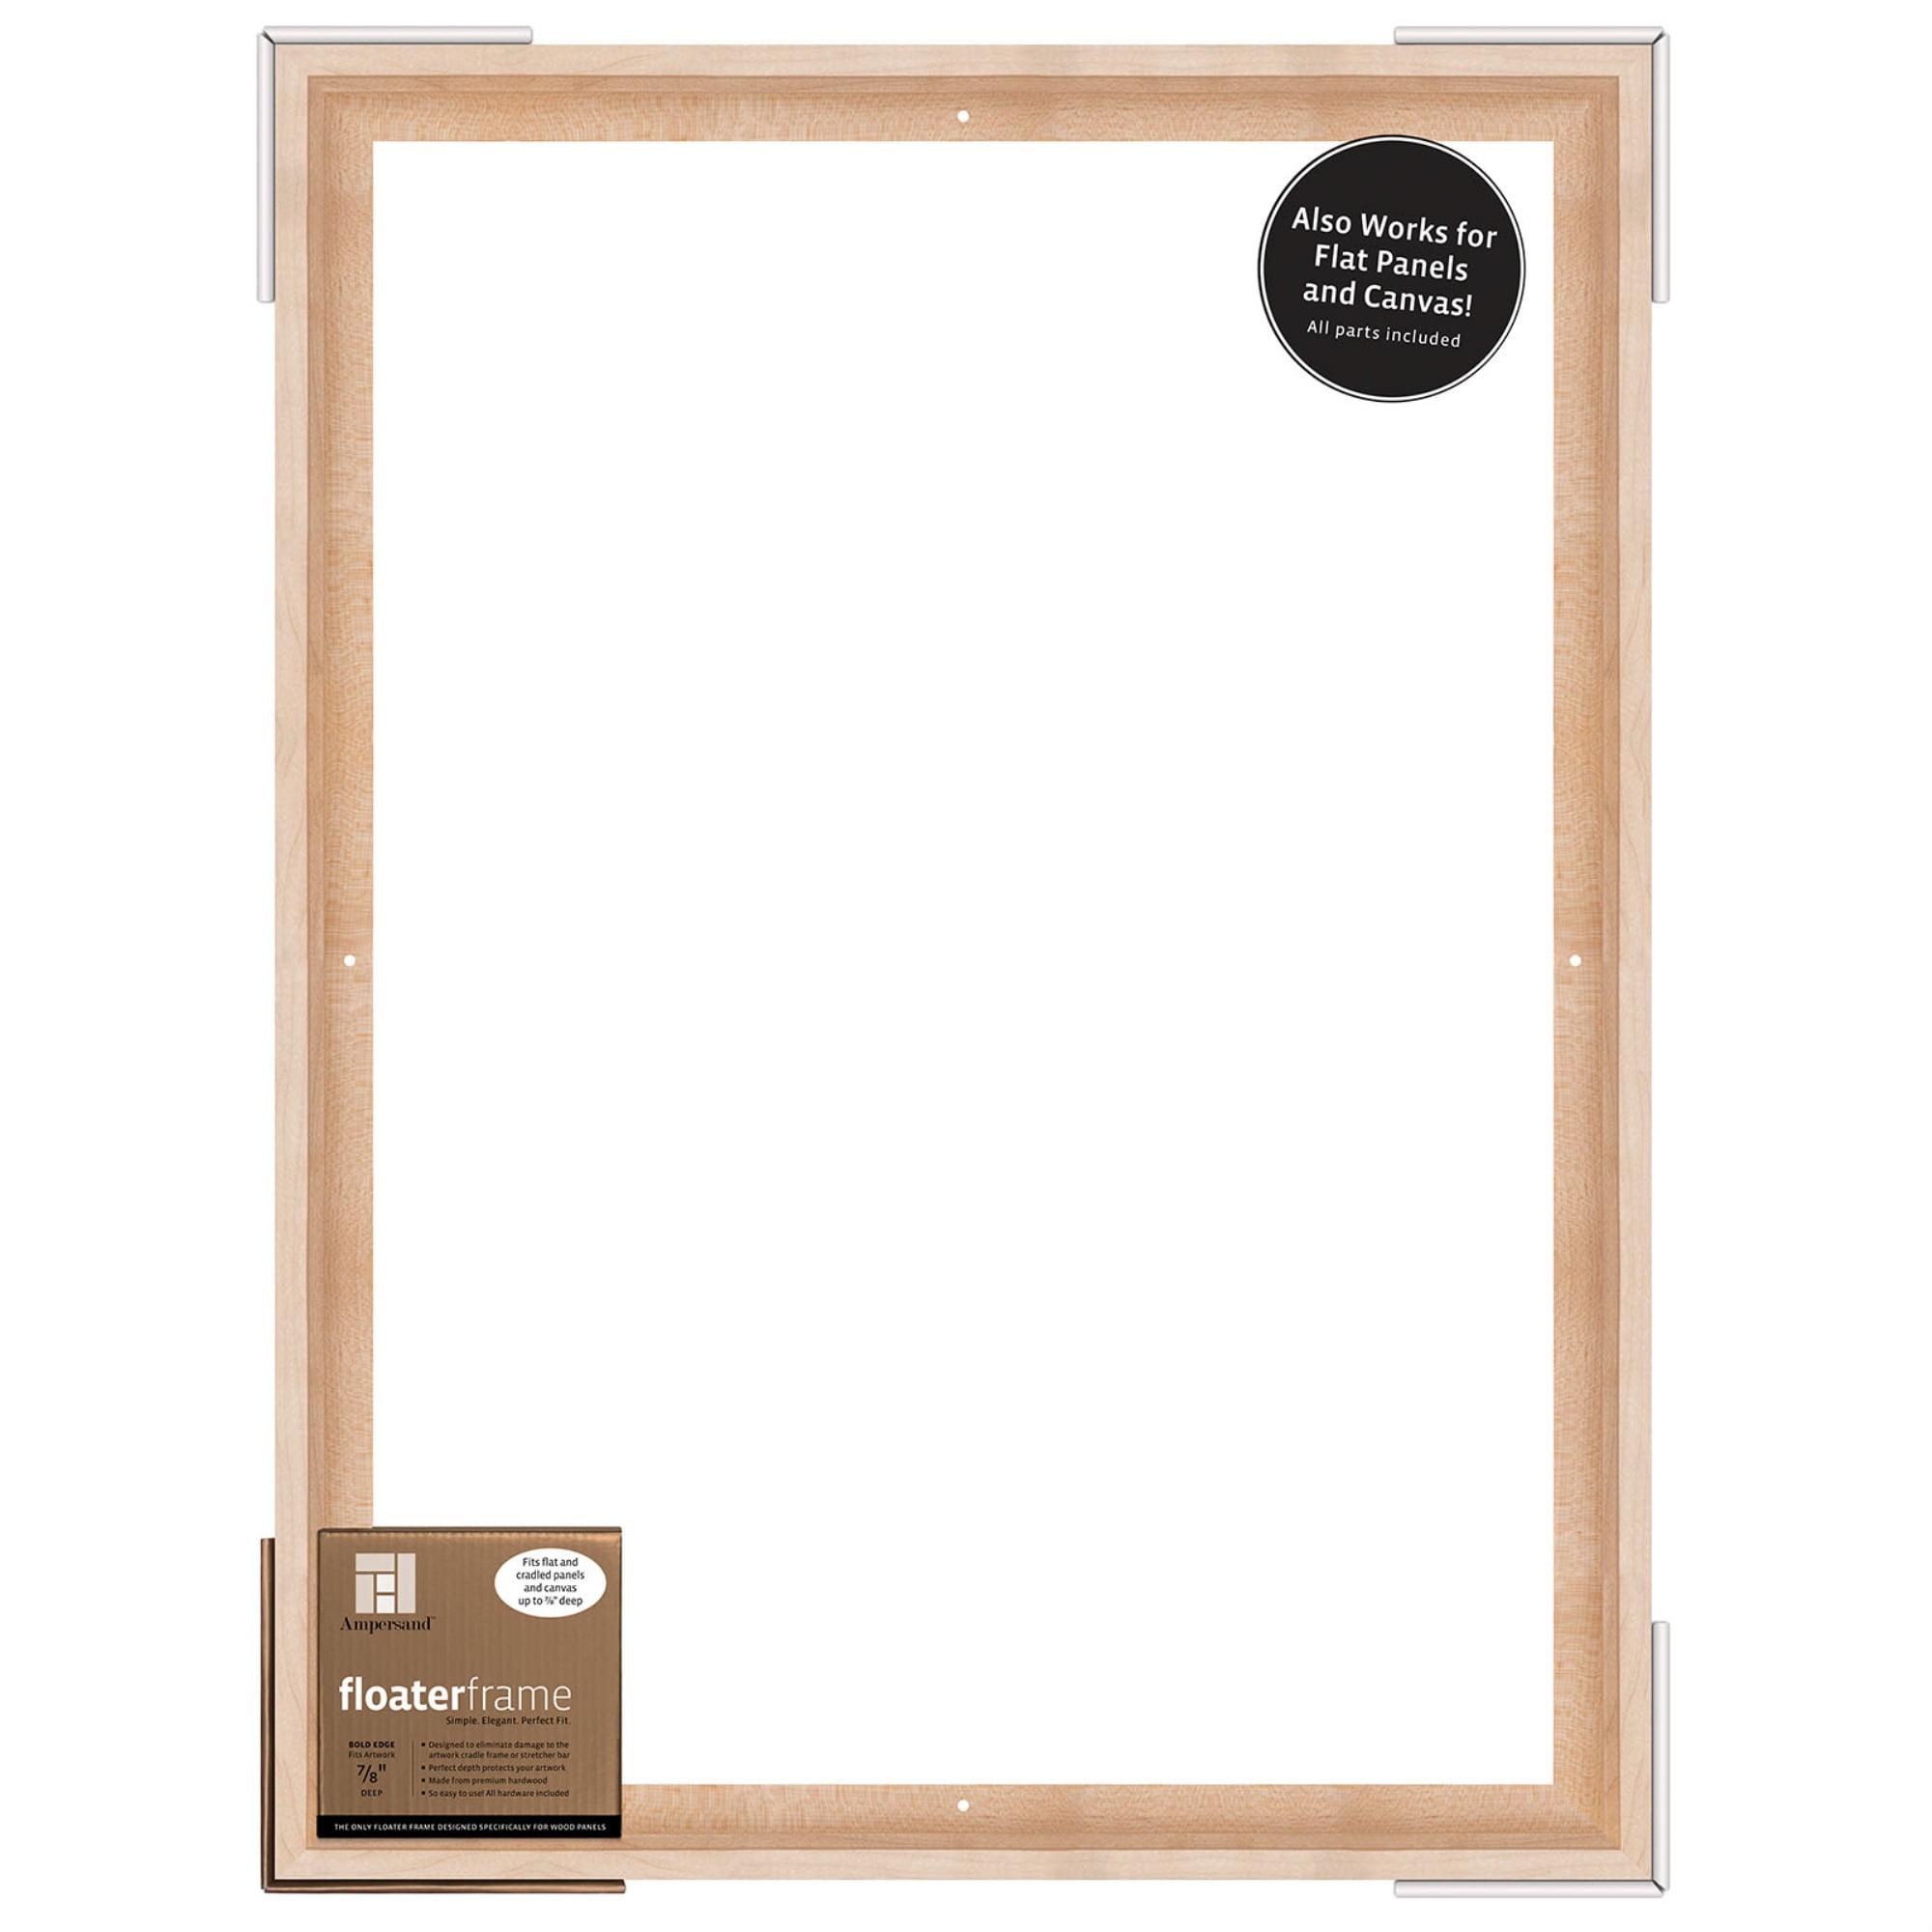 Elegant Maple Wood Floater Frame 18" x 24" for Art Display